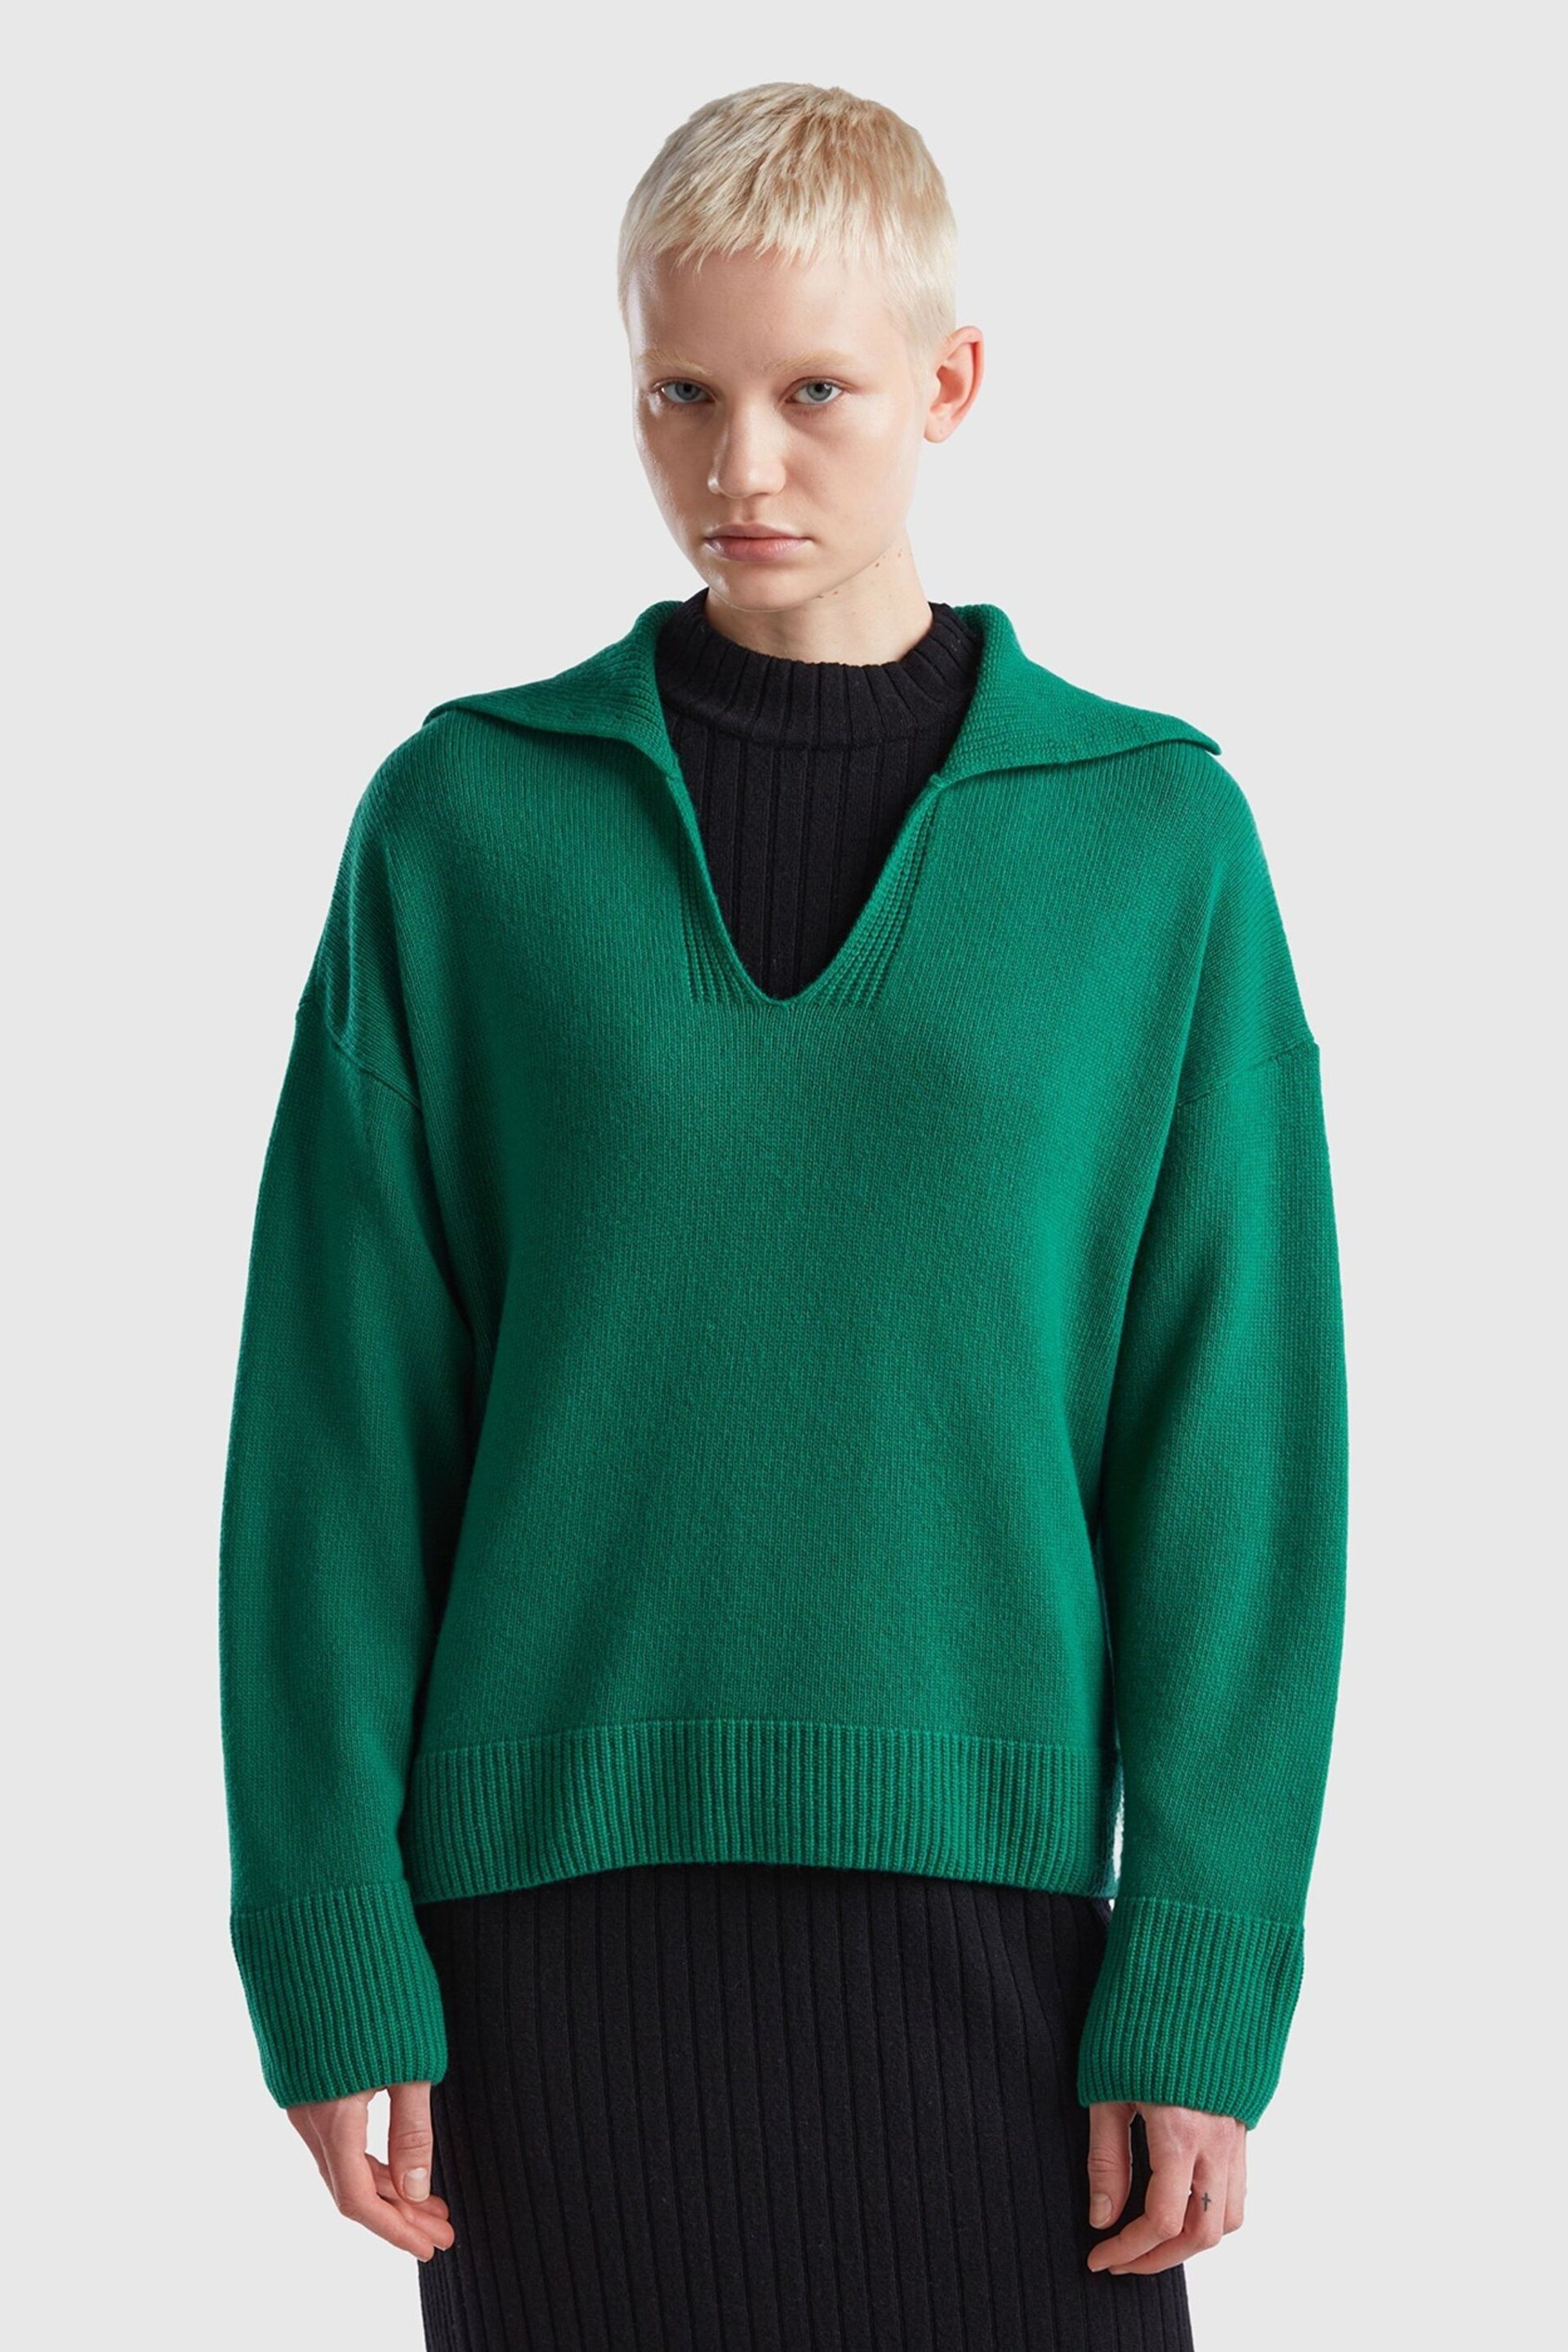 Benetton Oversized Green Wool Blend Collar Jumper - Image 1 of 3